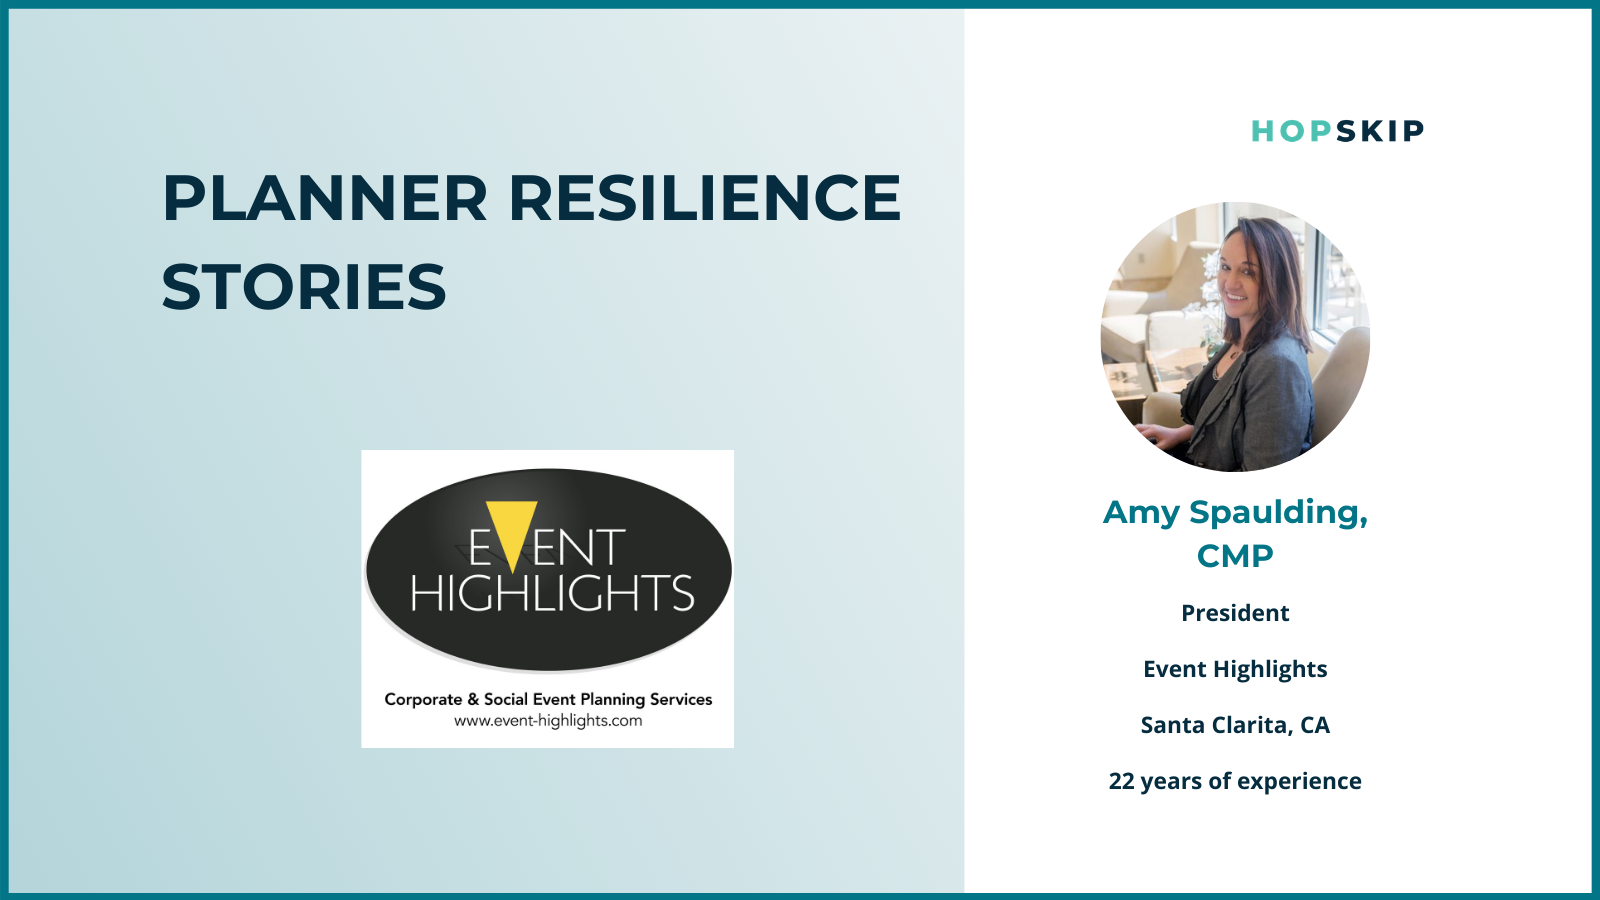 Planner resilience spotlight of Amy Spaulding, President of Event Highlights